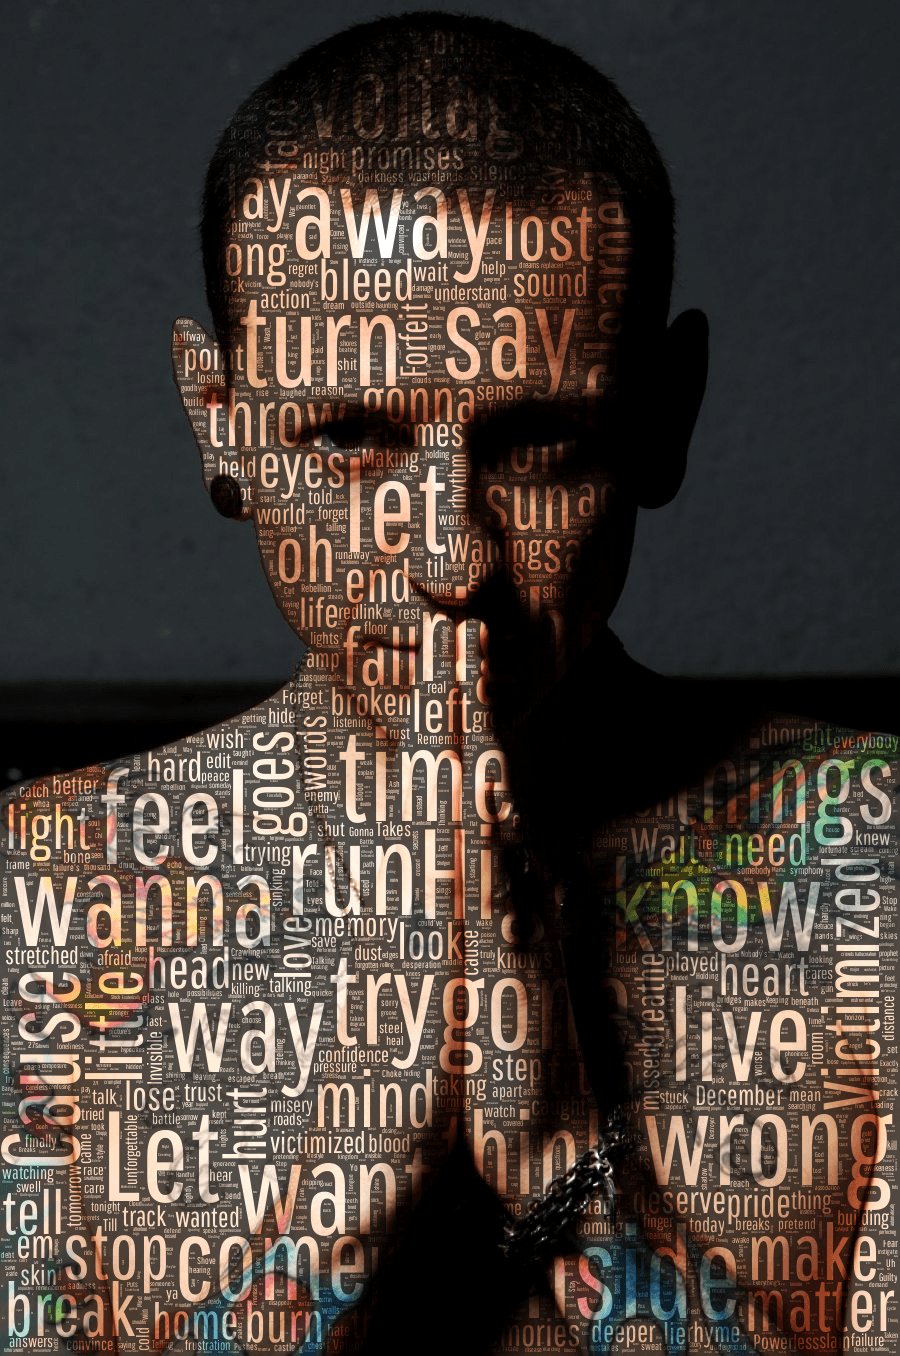 Linkin Park Lyrics Wallpapers - Wallpaper Cave